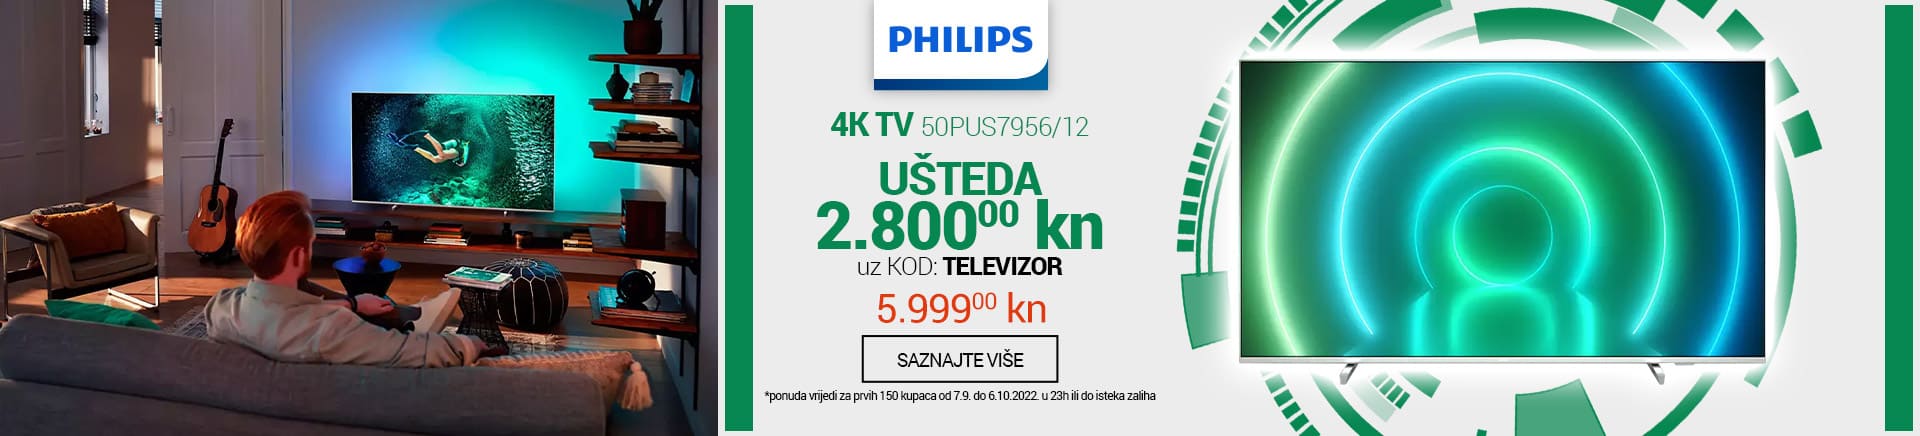 PHILIPS LED TV 50PUS7956 12 ušteda do 2800 kn uz KOD: TELEVIZOR